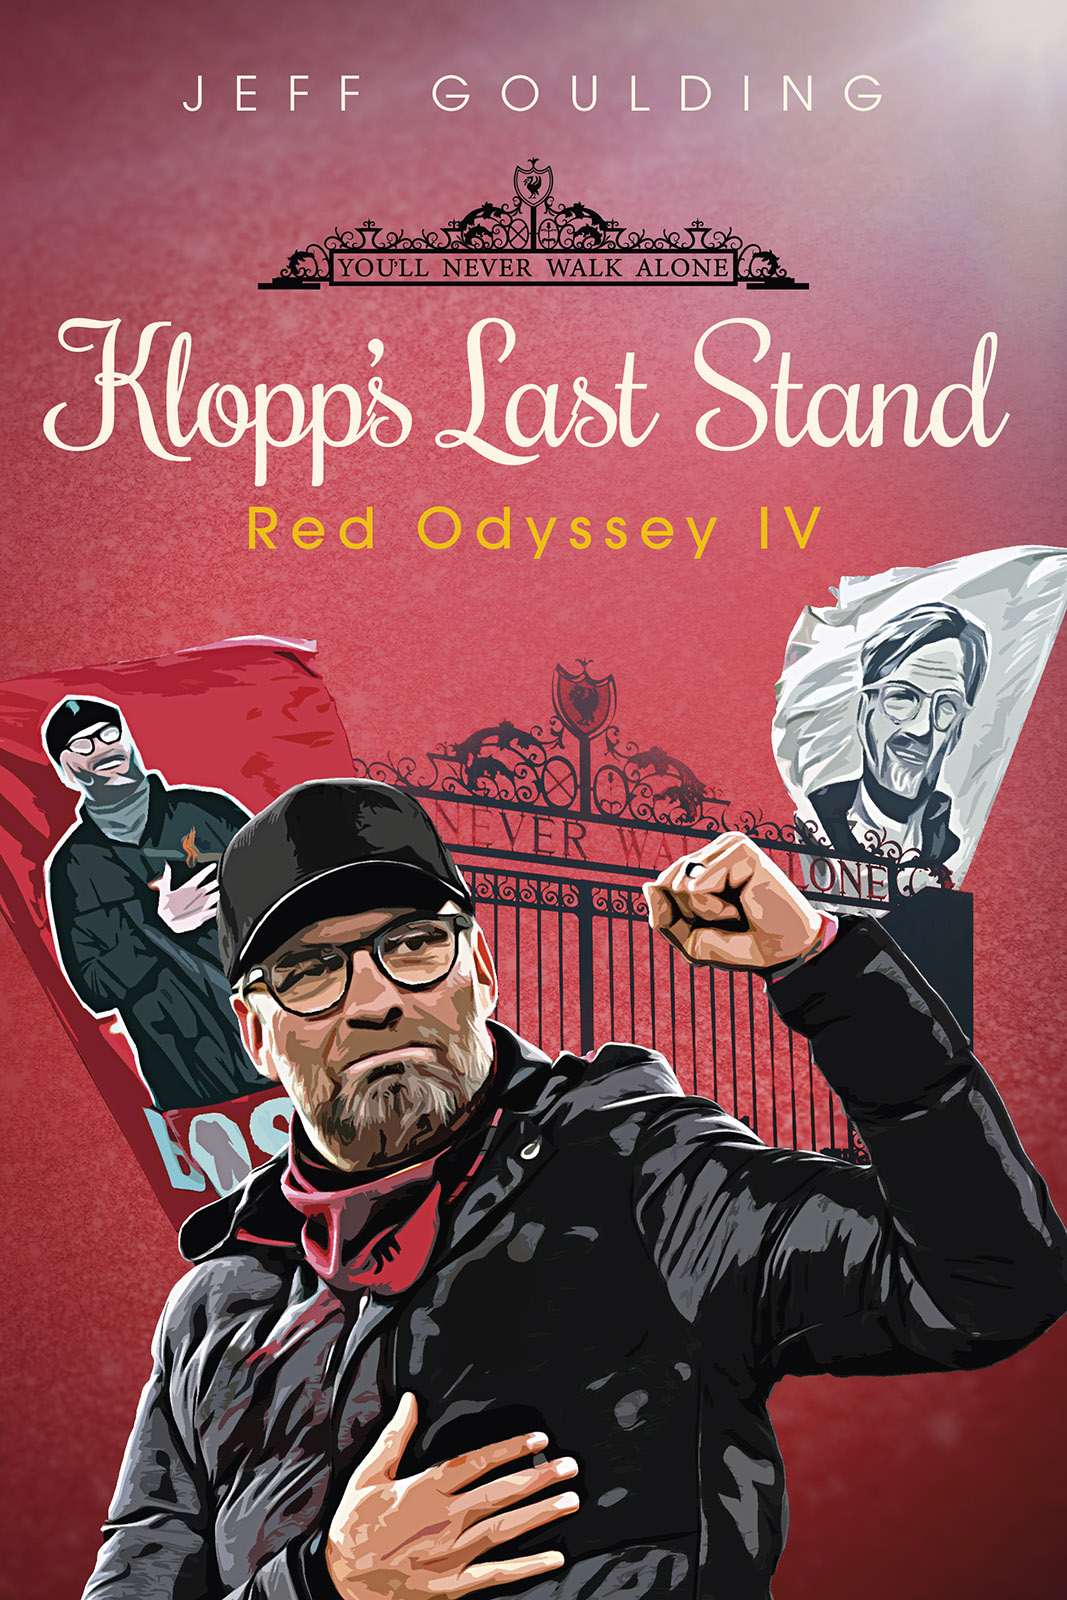 Klopp's Last Stand